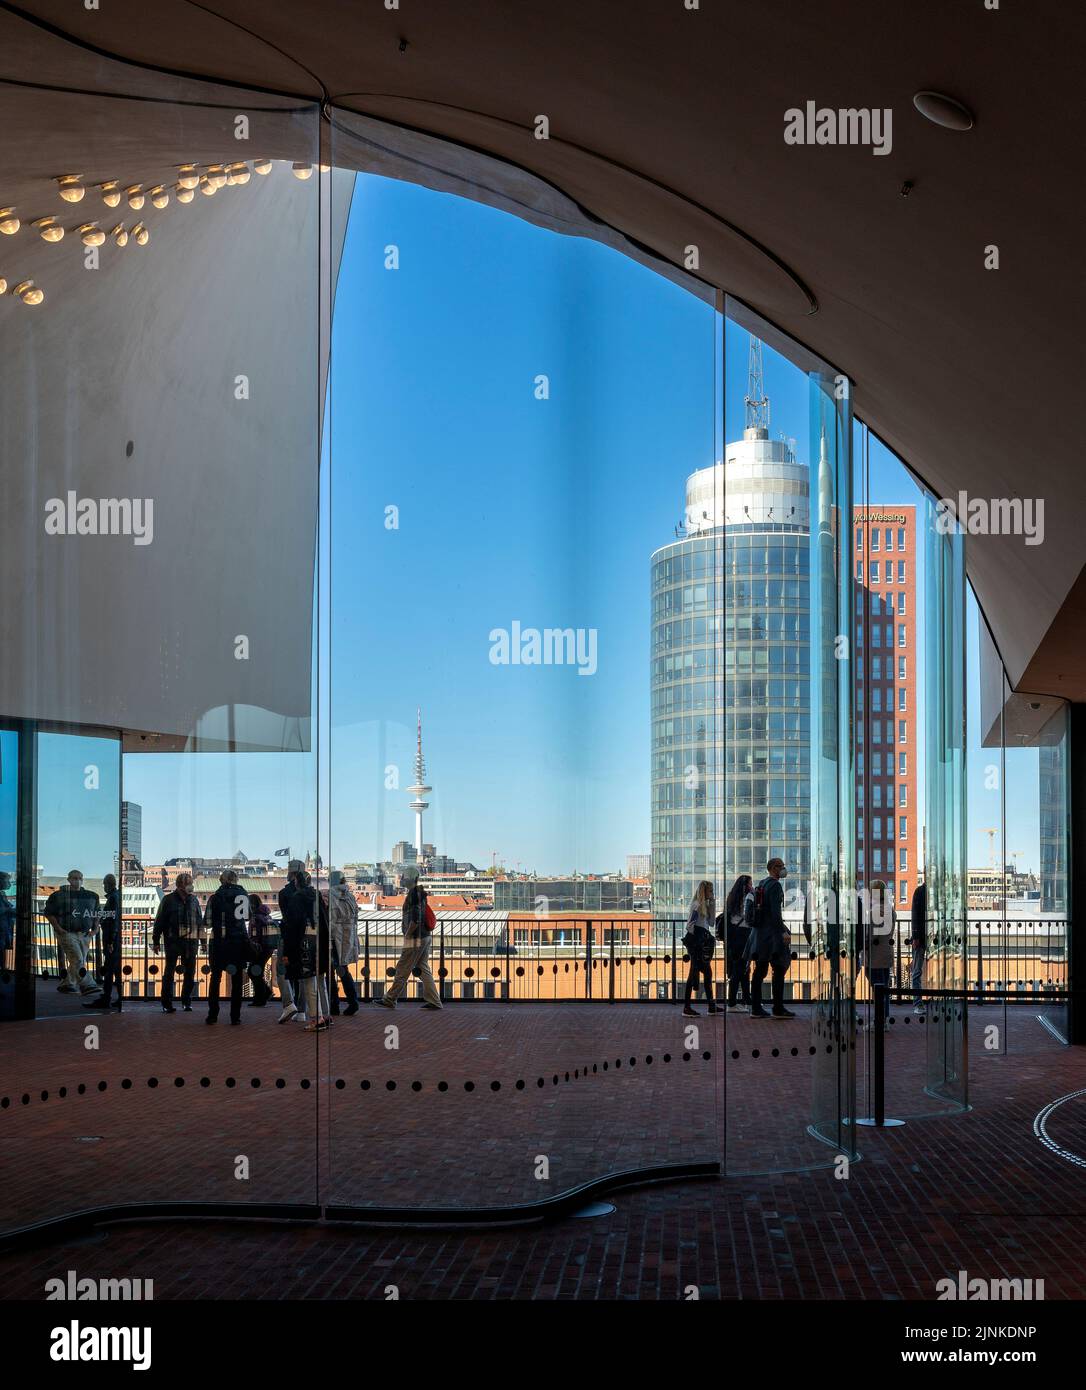 Viewing Platform In The Elbphilharmonie, Hamburg, Germany Stock Photo